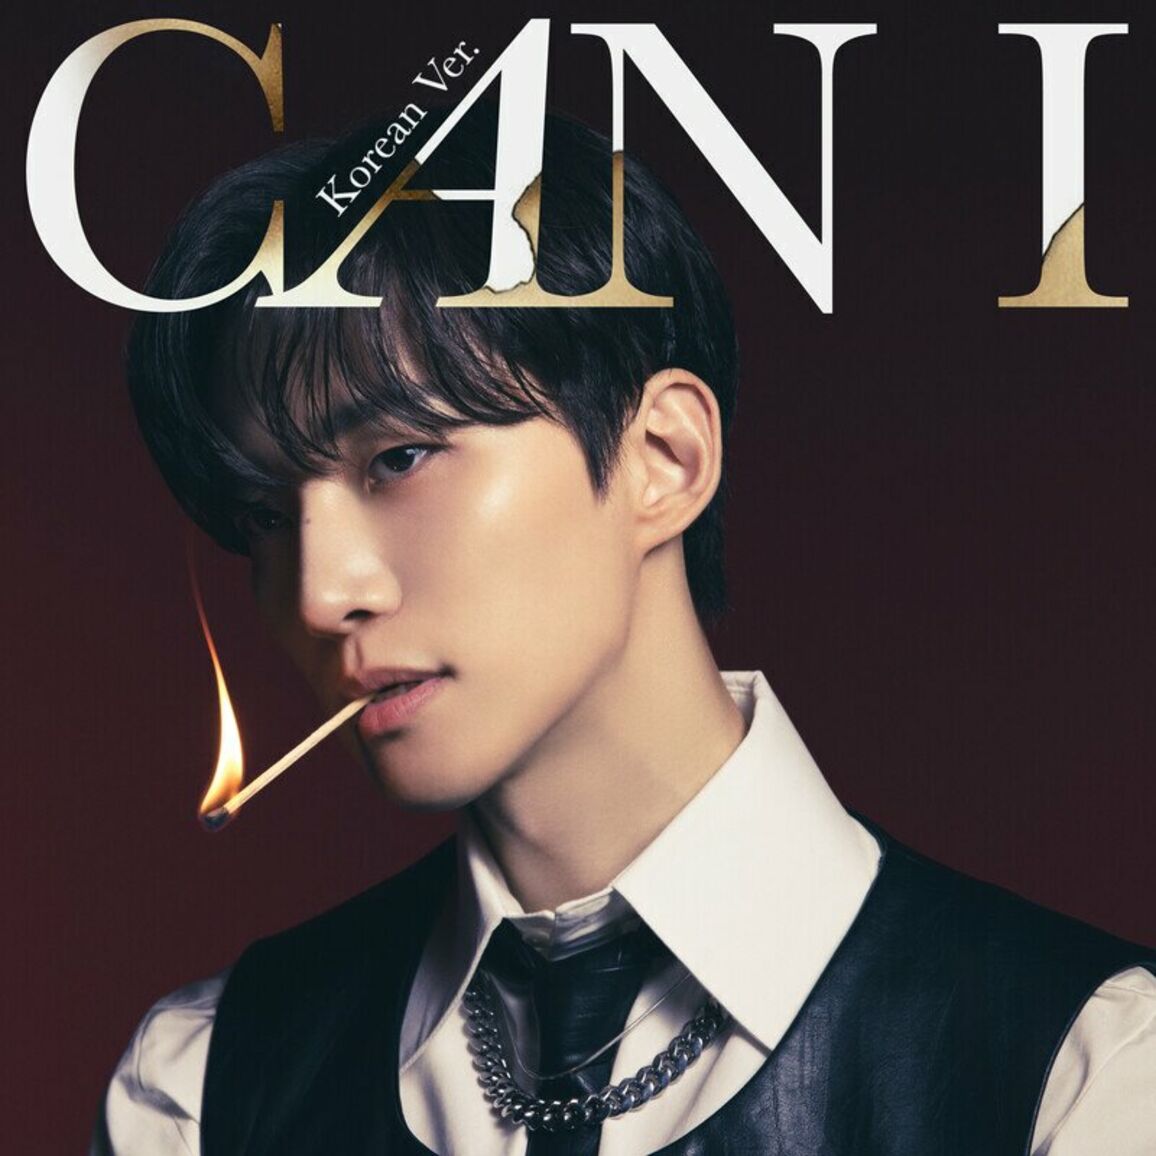 LEE JUNHO – Can I (Korean Ver.) – Single